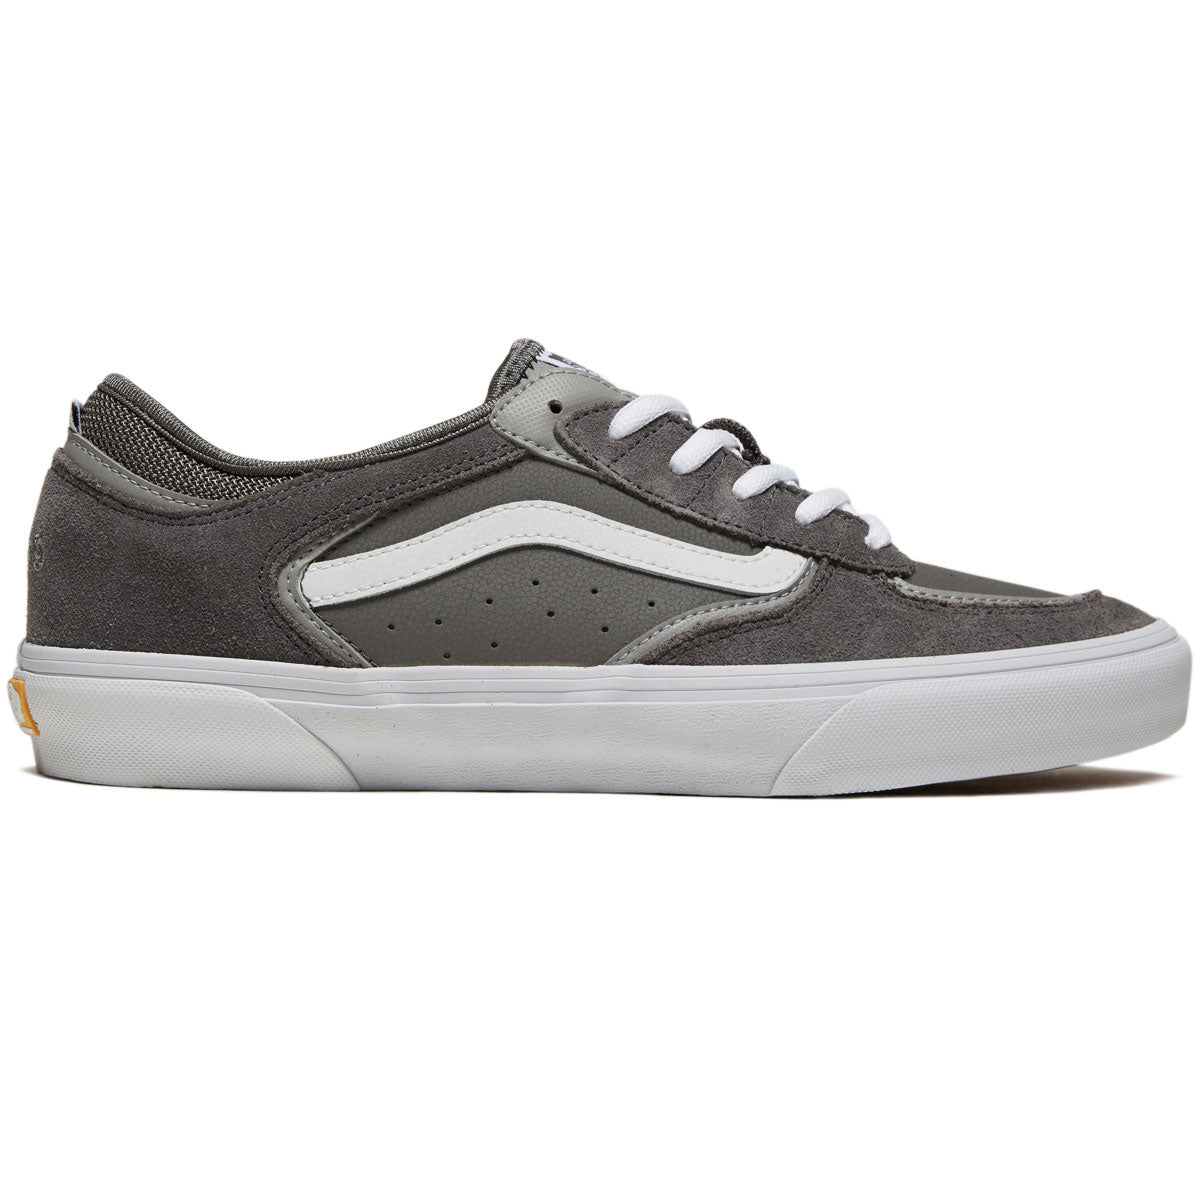 Vans Skate Rowley Shoes - Grey/White image 1